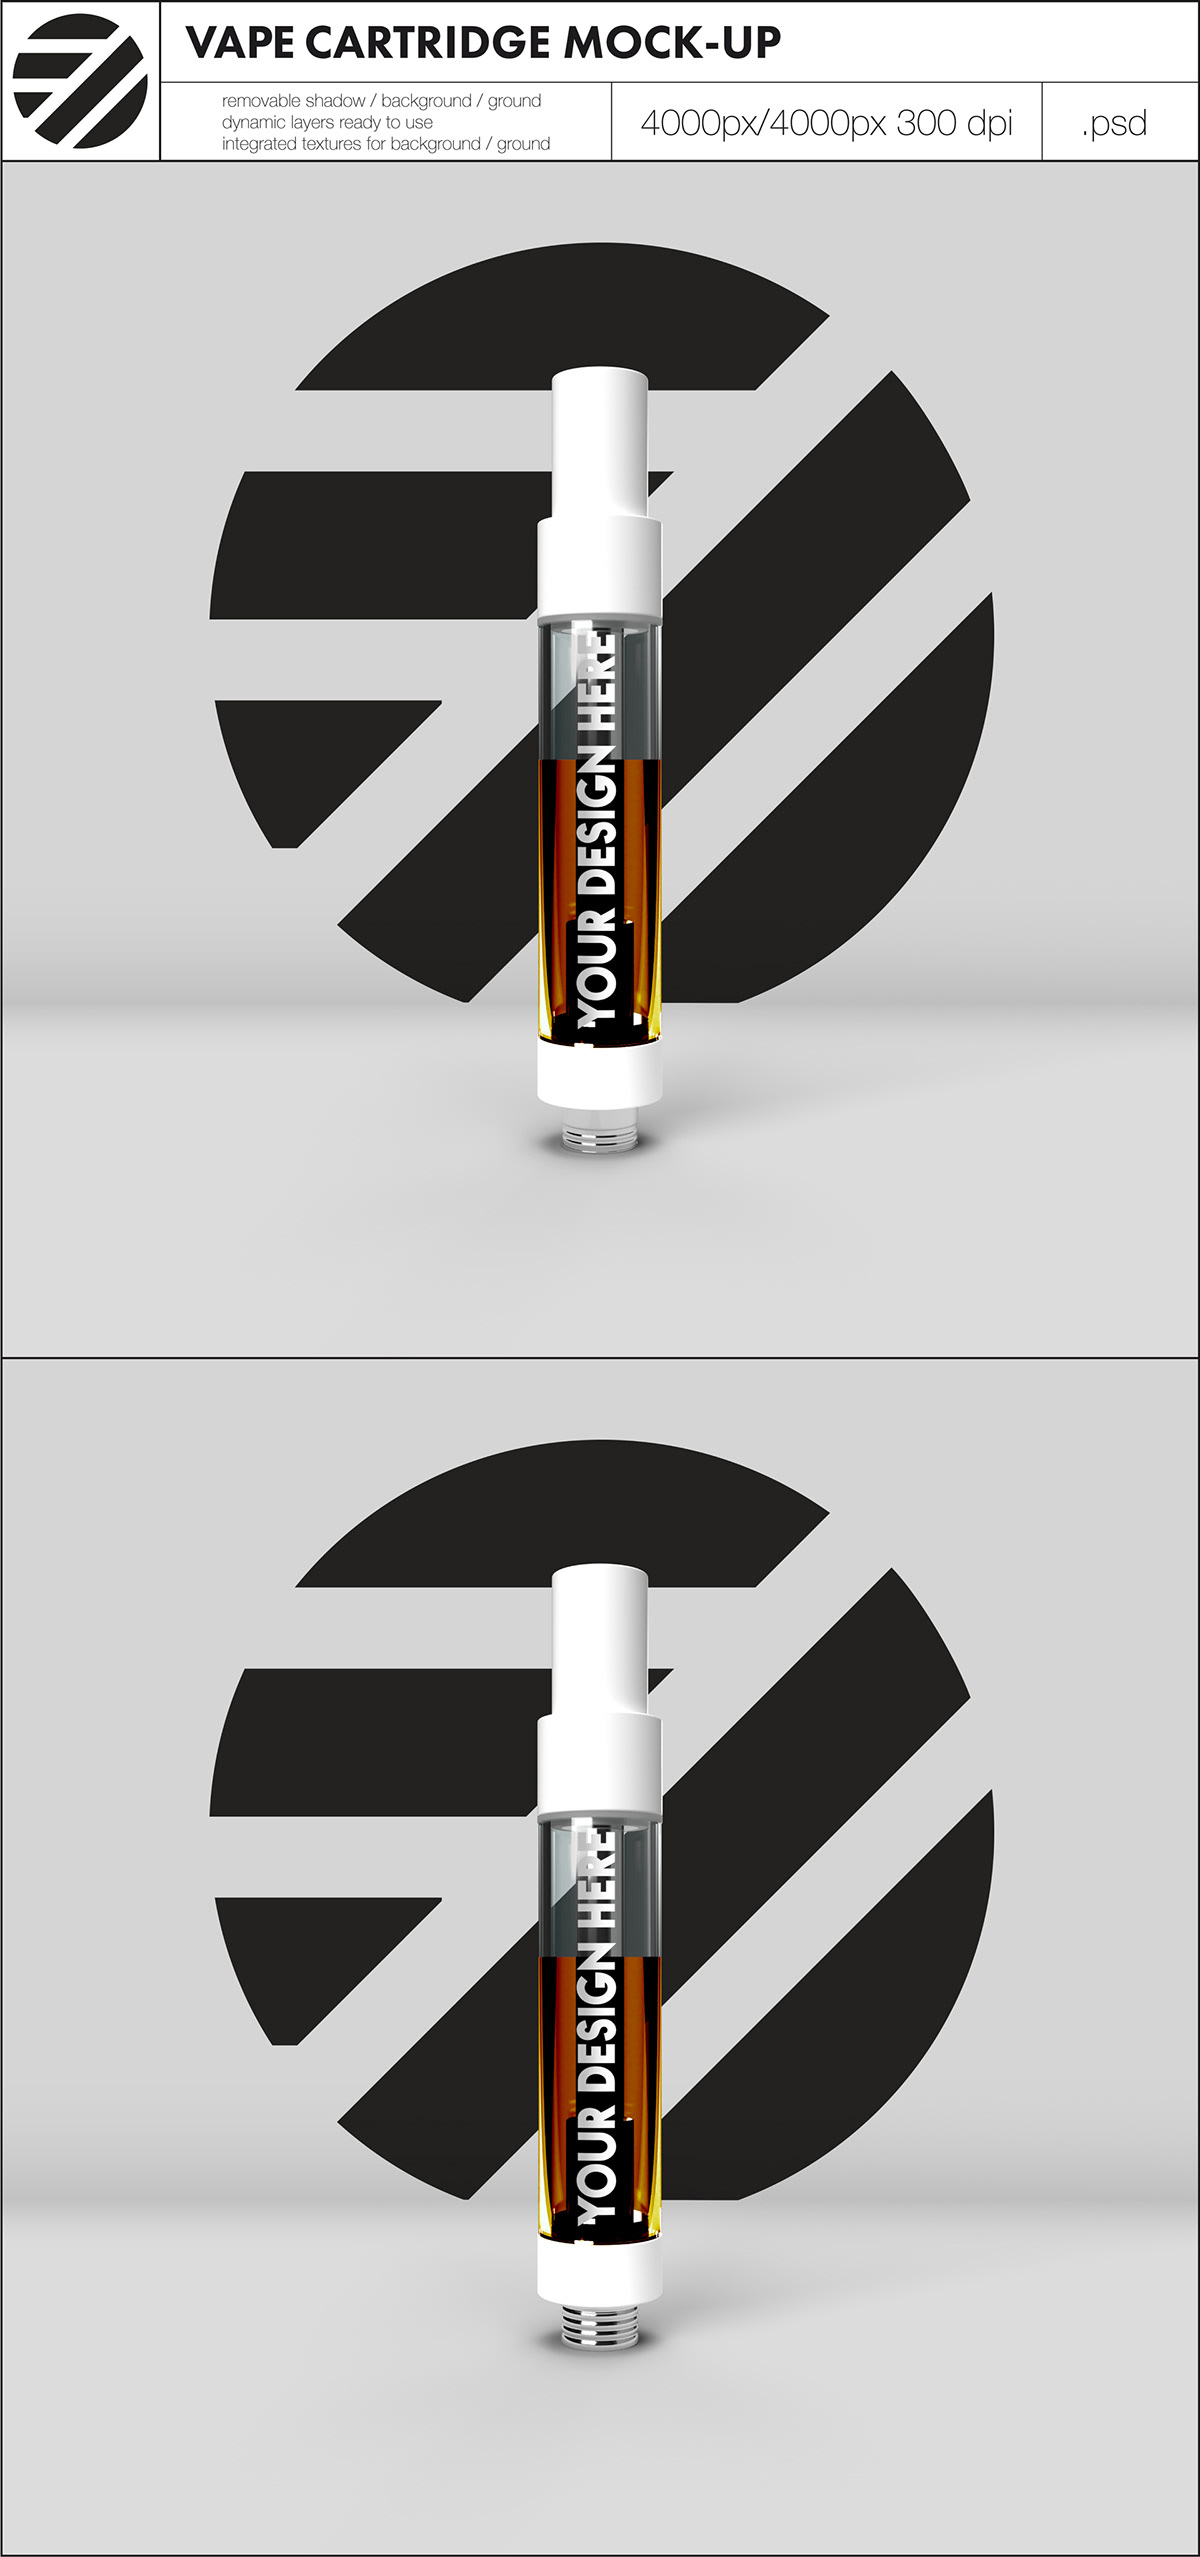 3D cartridge Mockup model Packaging Packshot psd Vape free freebie